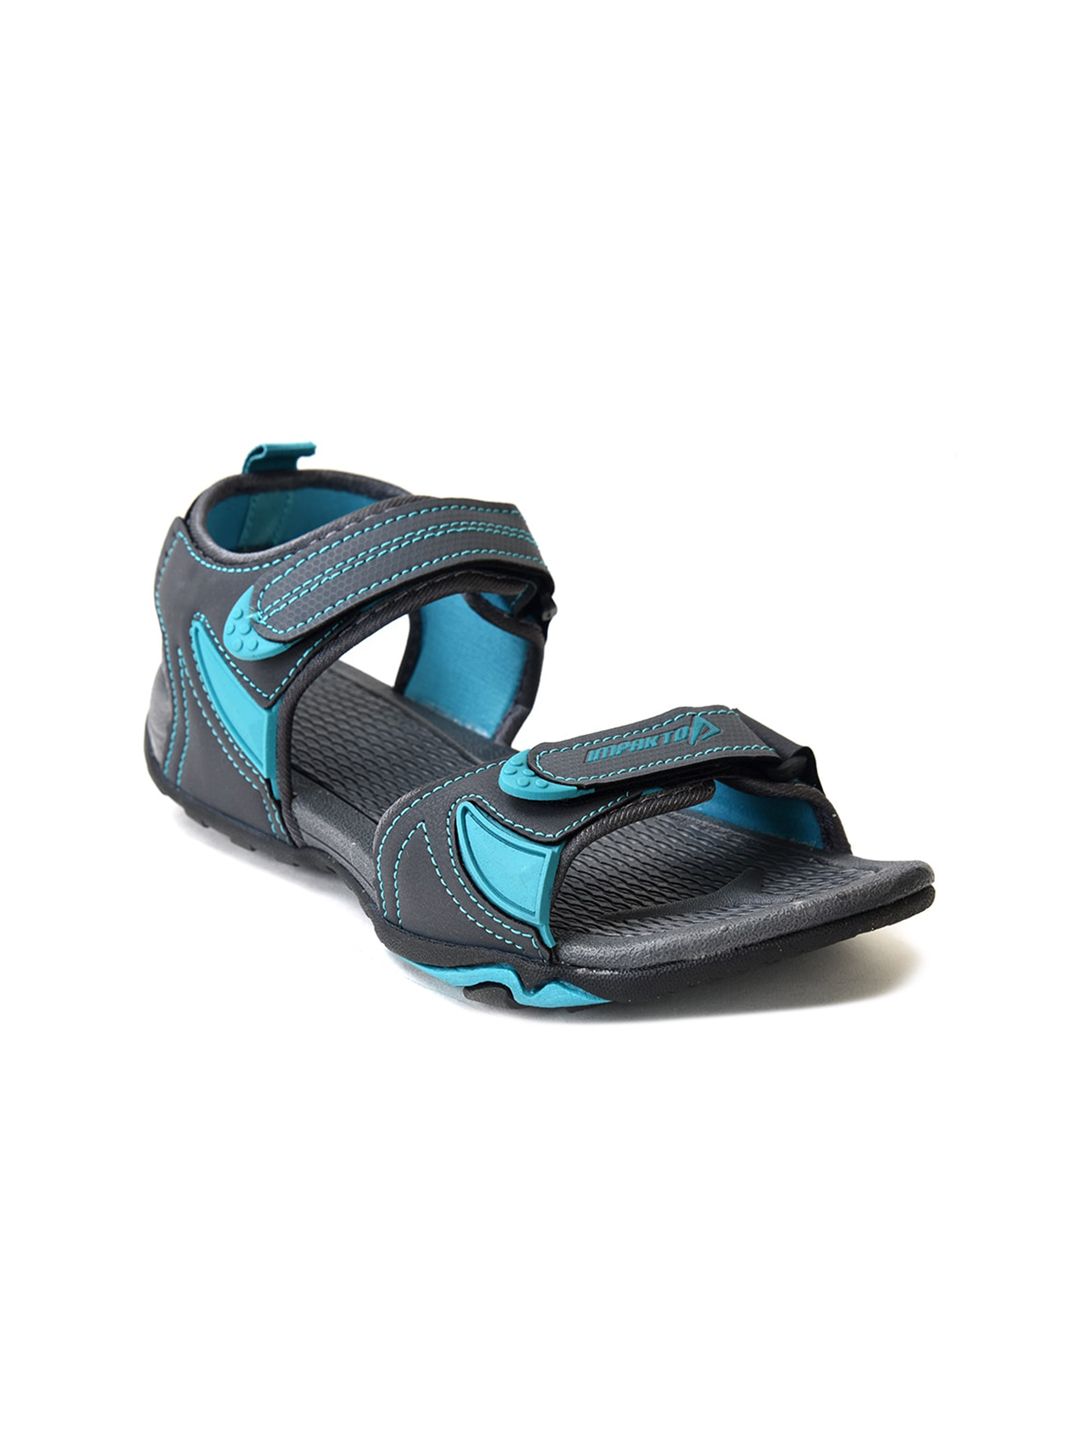 IMPAKTO Women Grey & Blue Sports Sandals Price in India